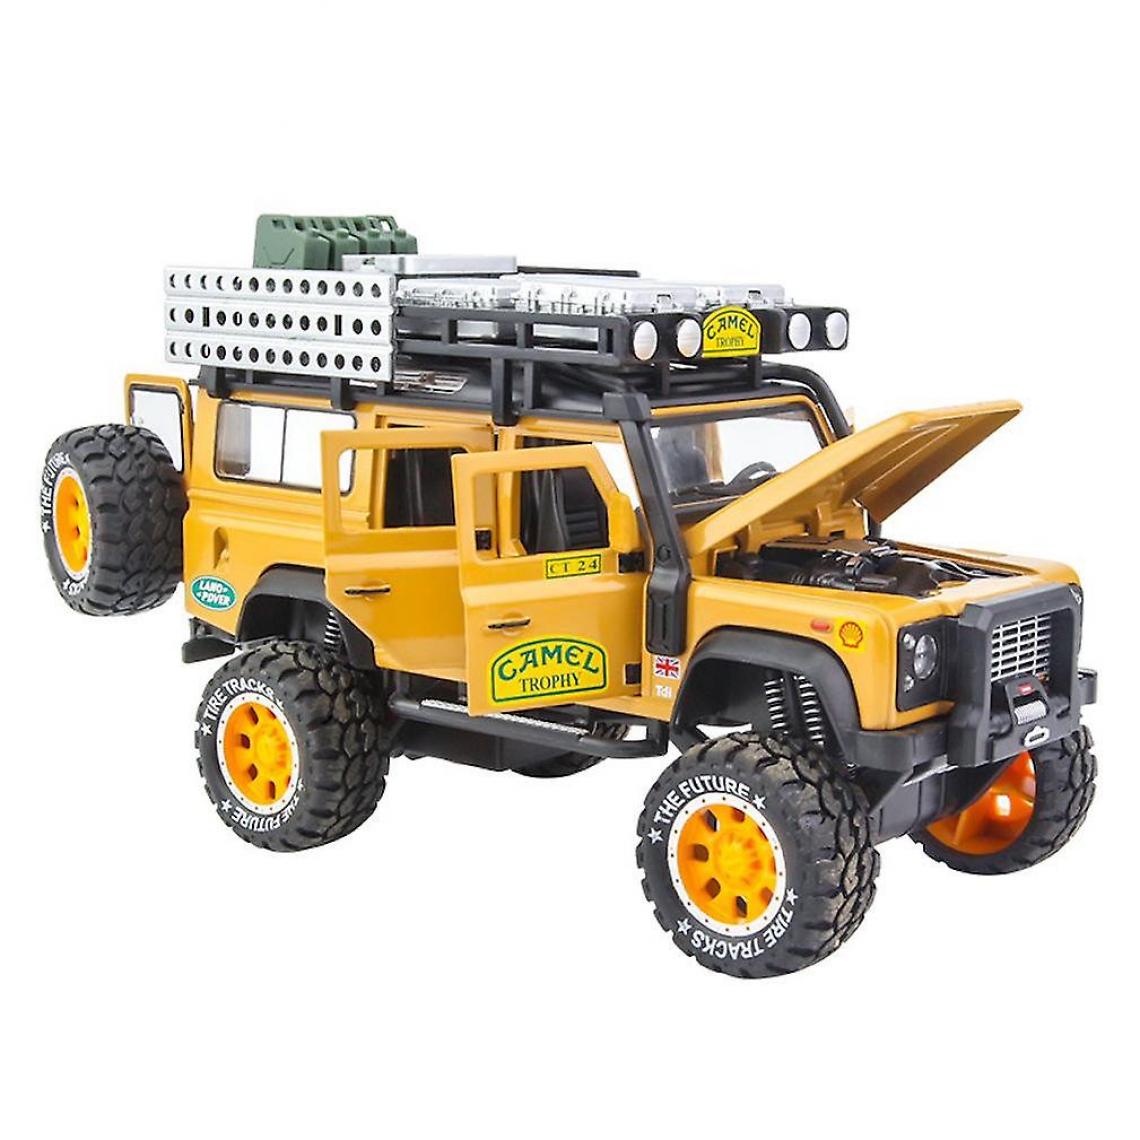 Universal - 1: 28 Die-cast pull back toy alliage jeep aventure modèle(Jaune) - Voitures